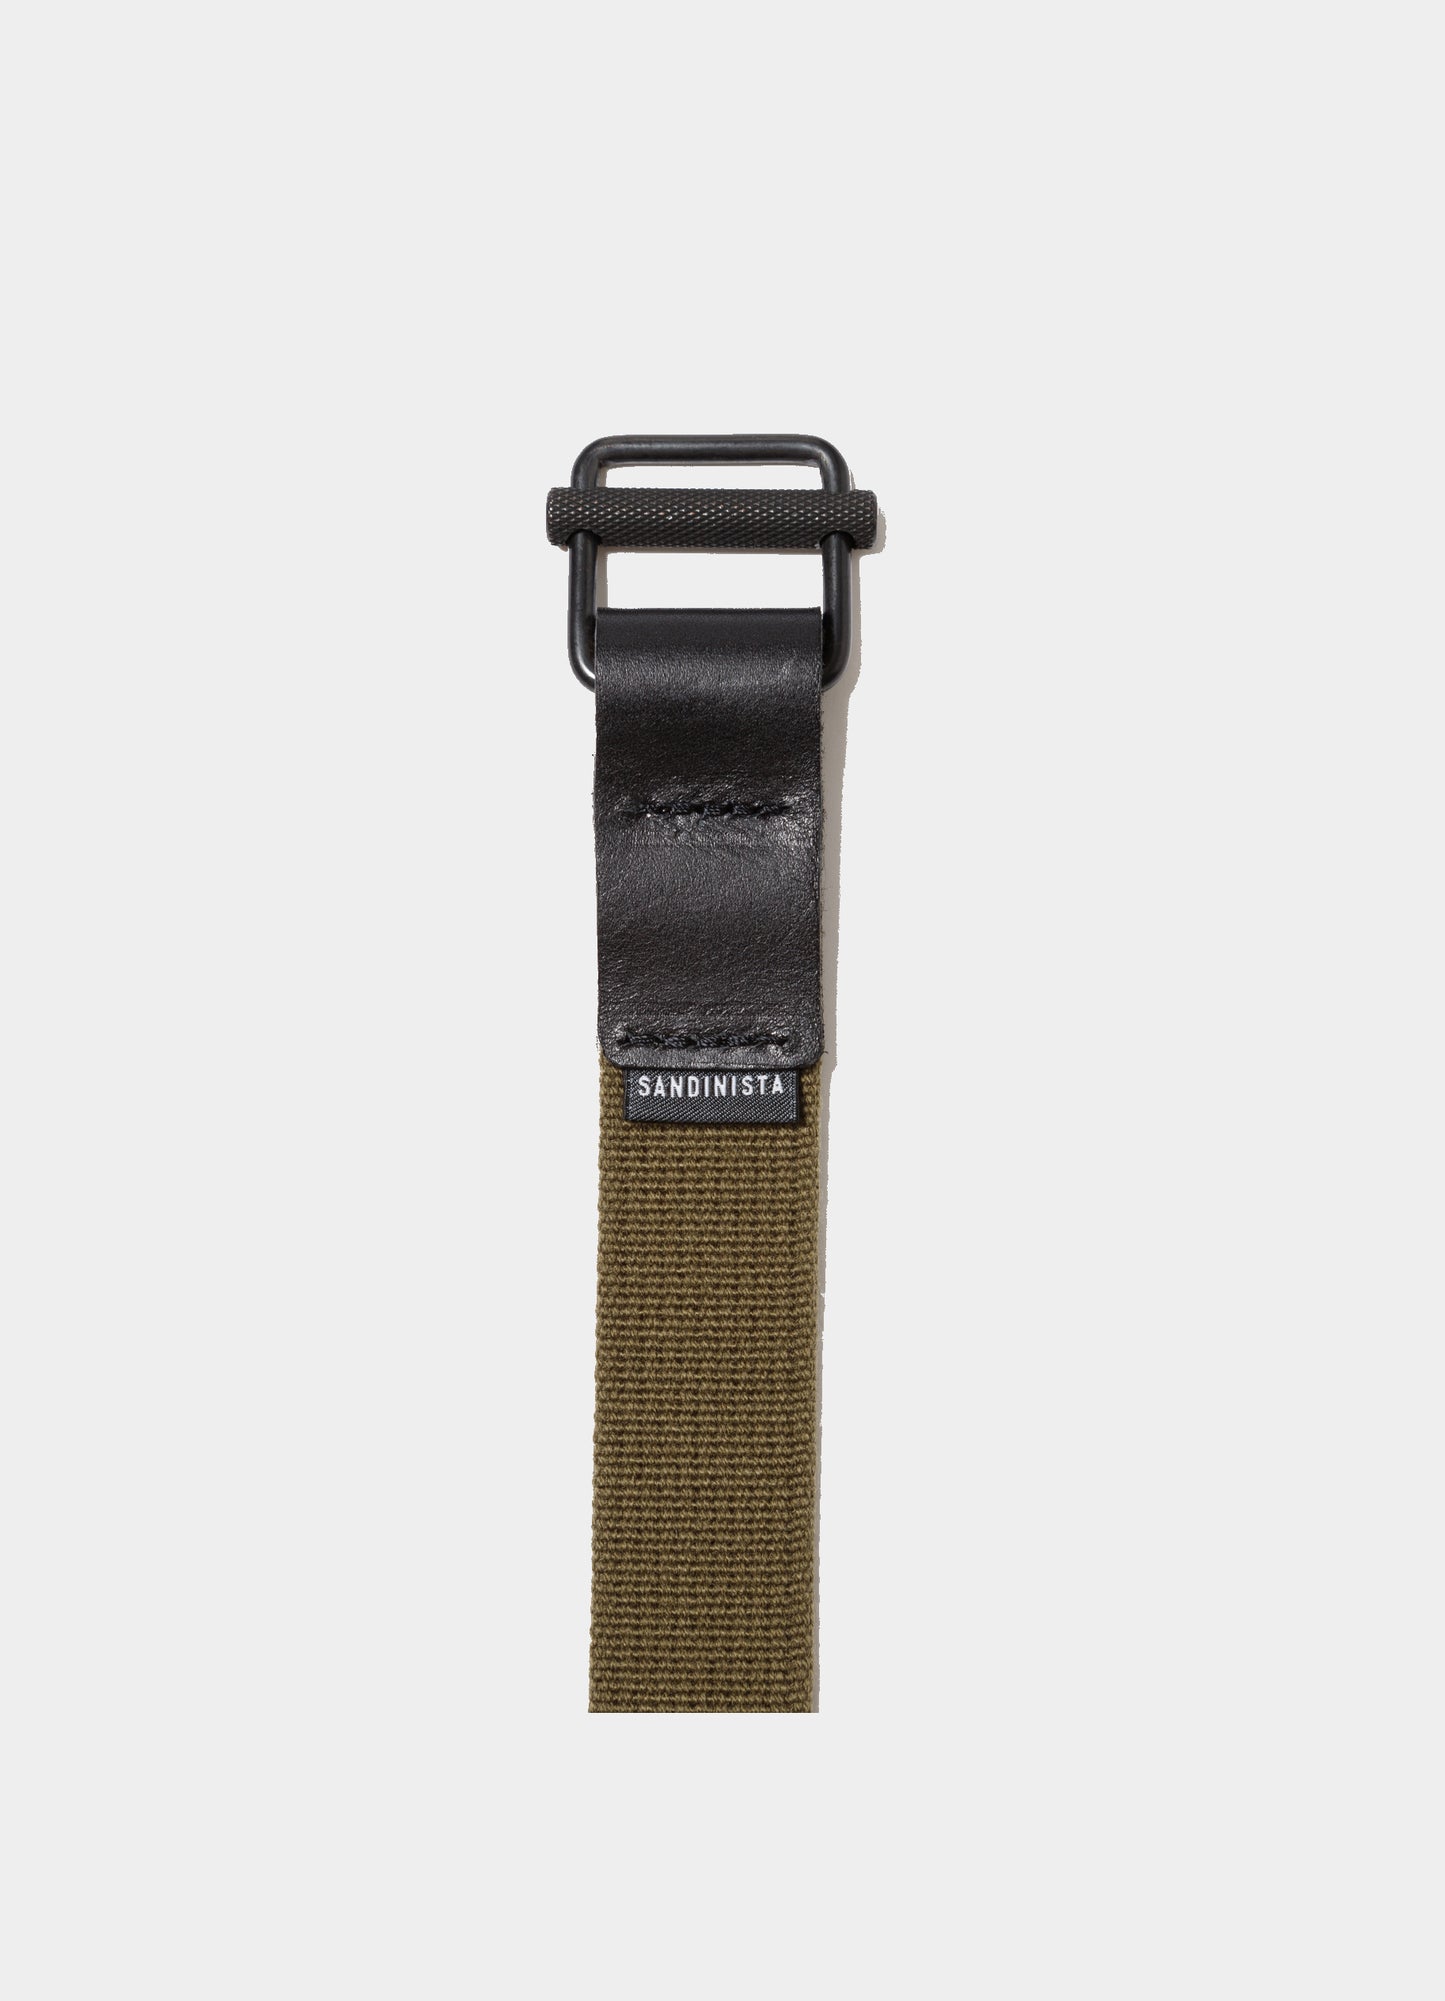 Military Tape Belt [DS-B-02]